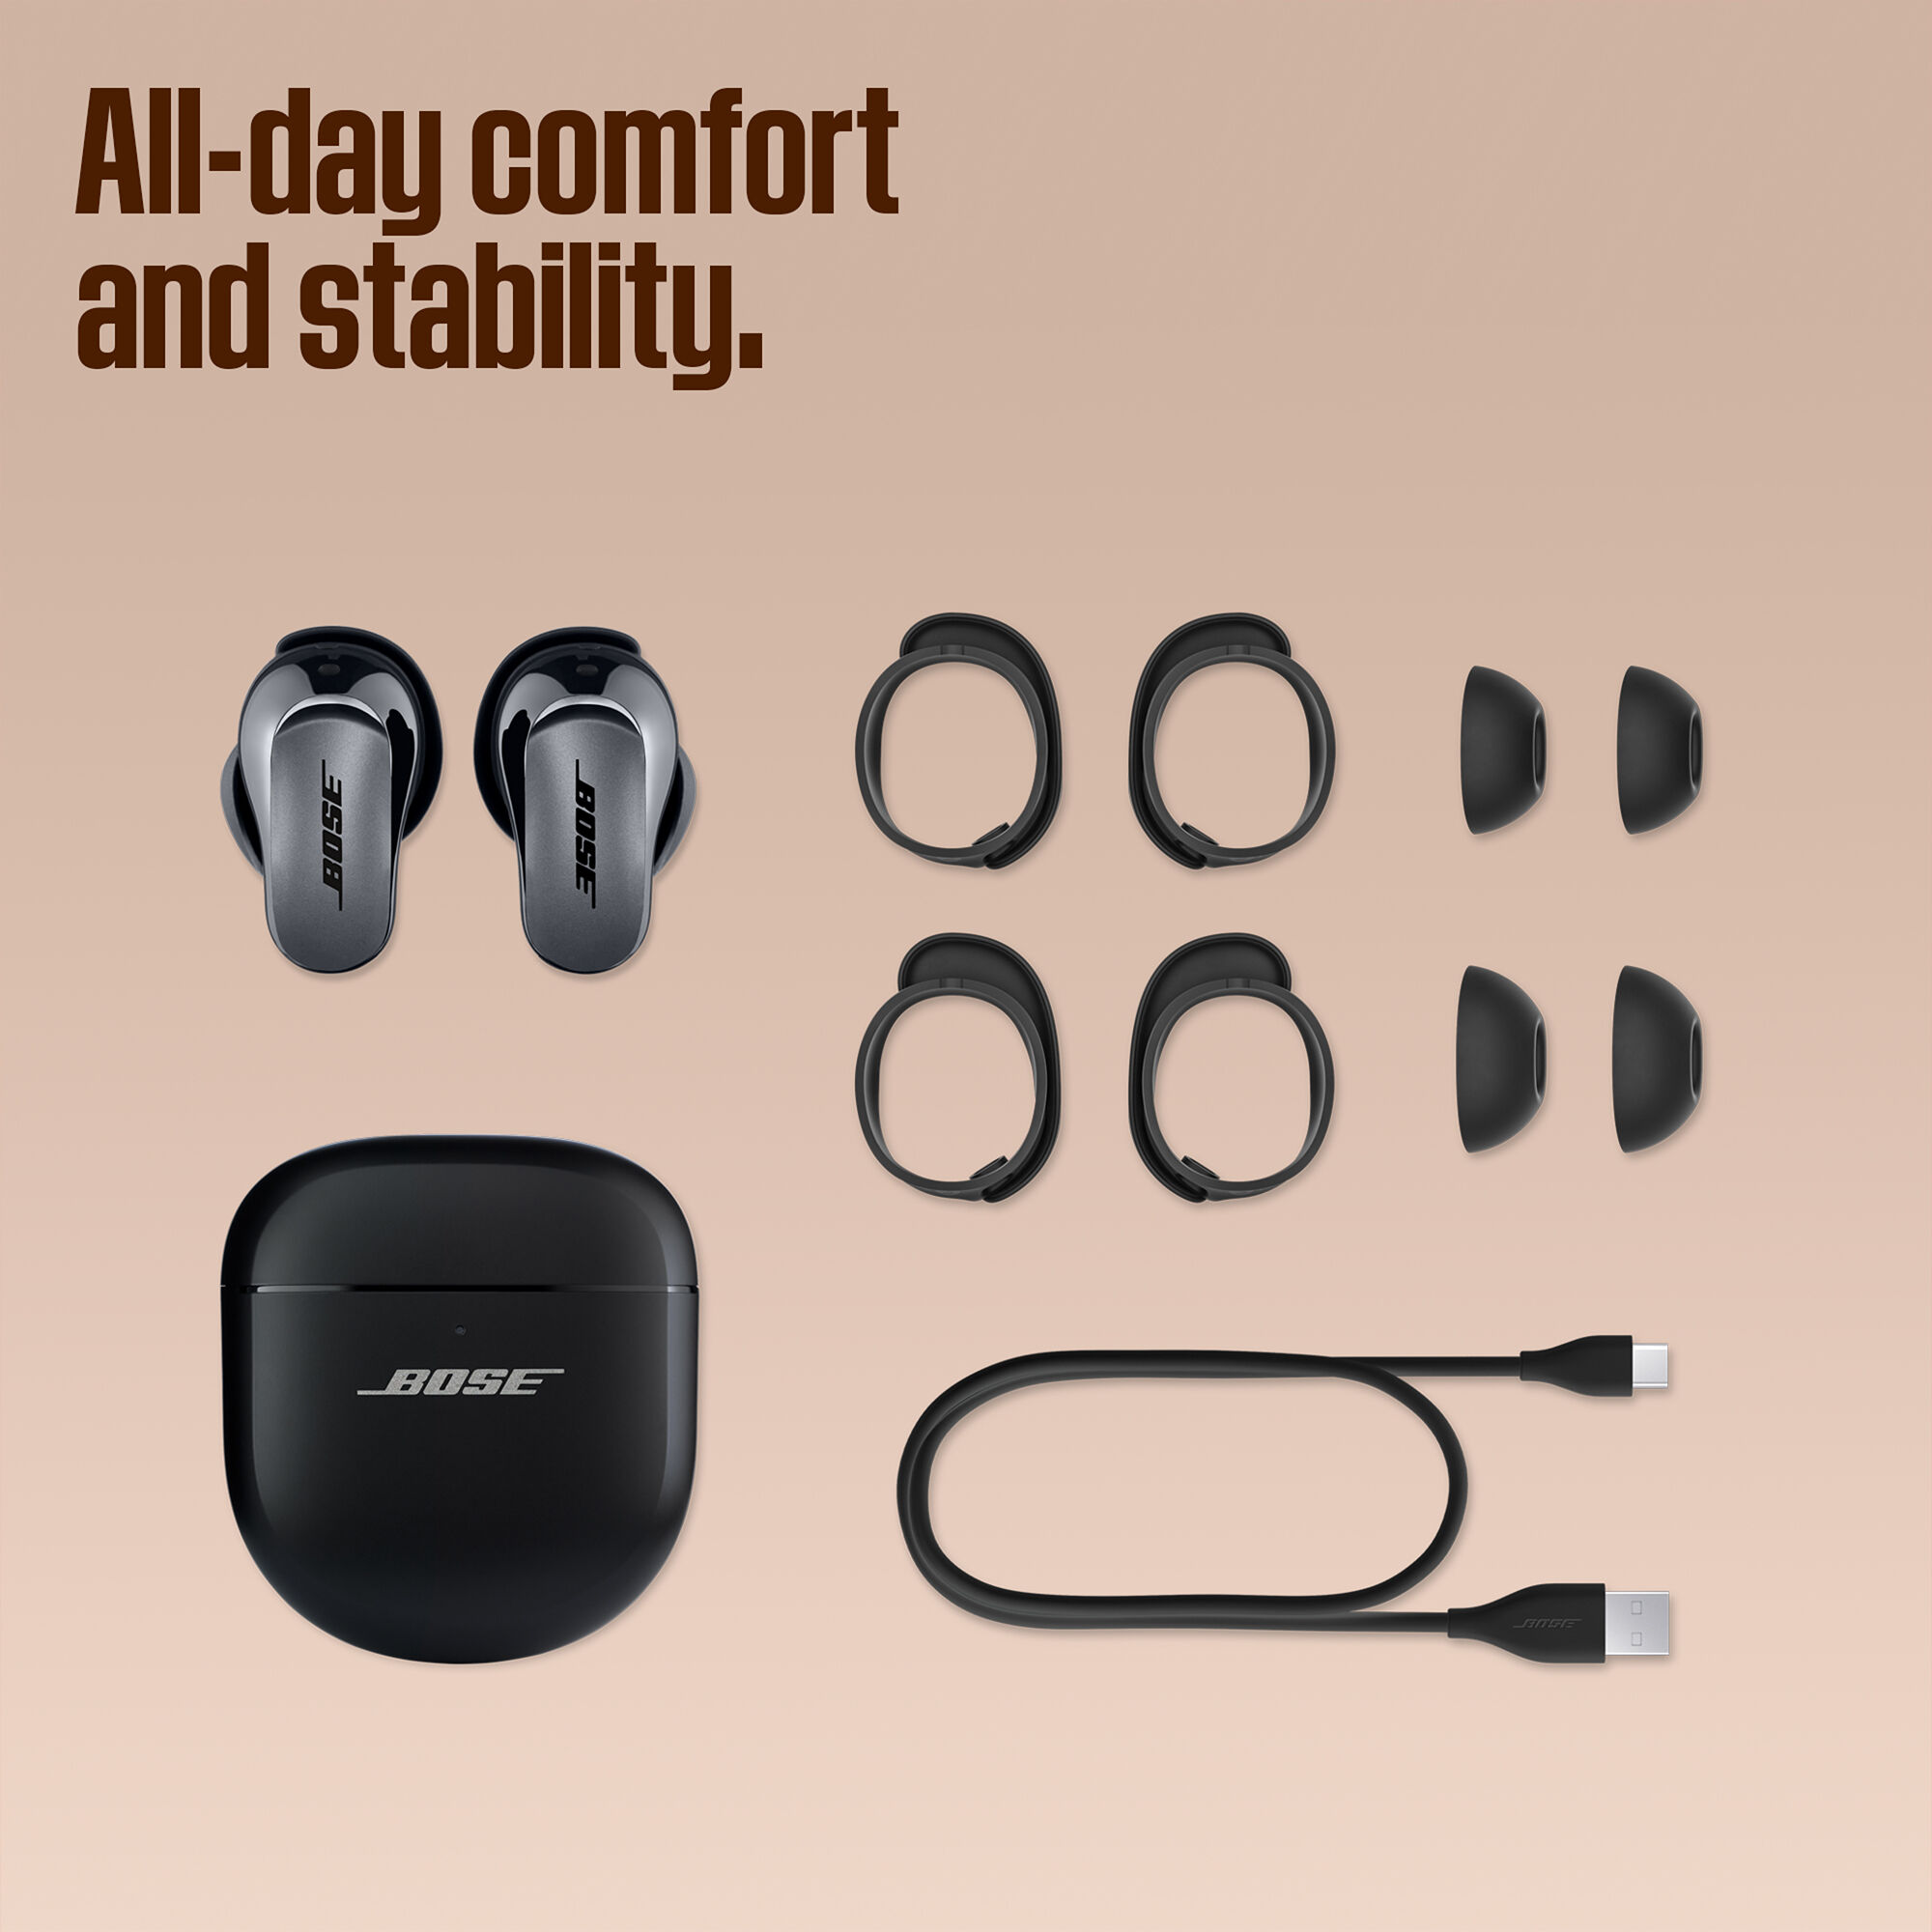 New Bose Quiet Comfort Ultra Earbuds   Black   P.C. Richard & Son